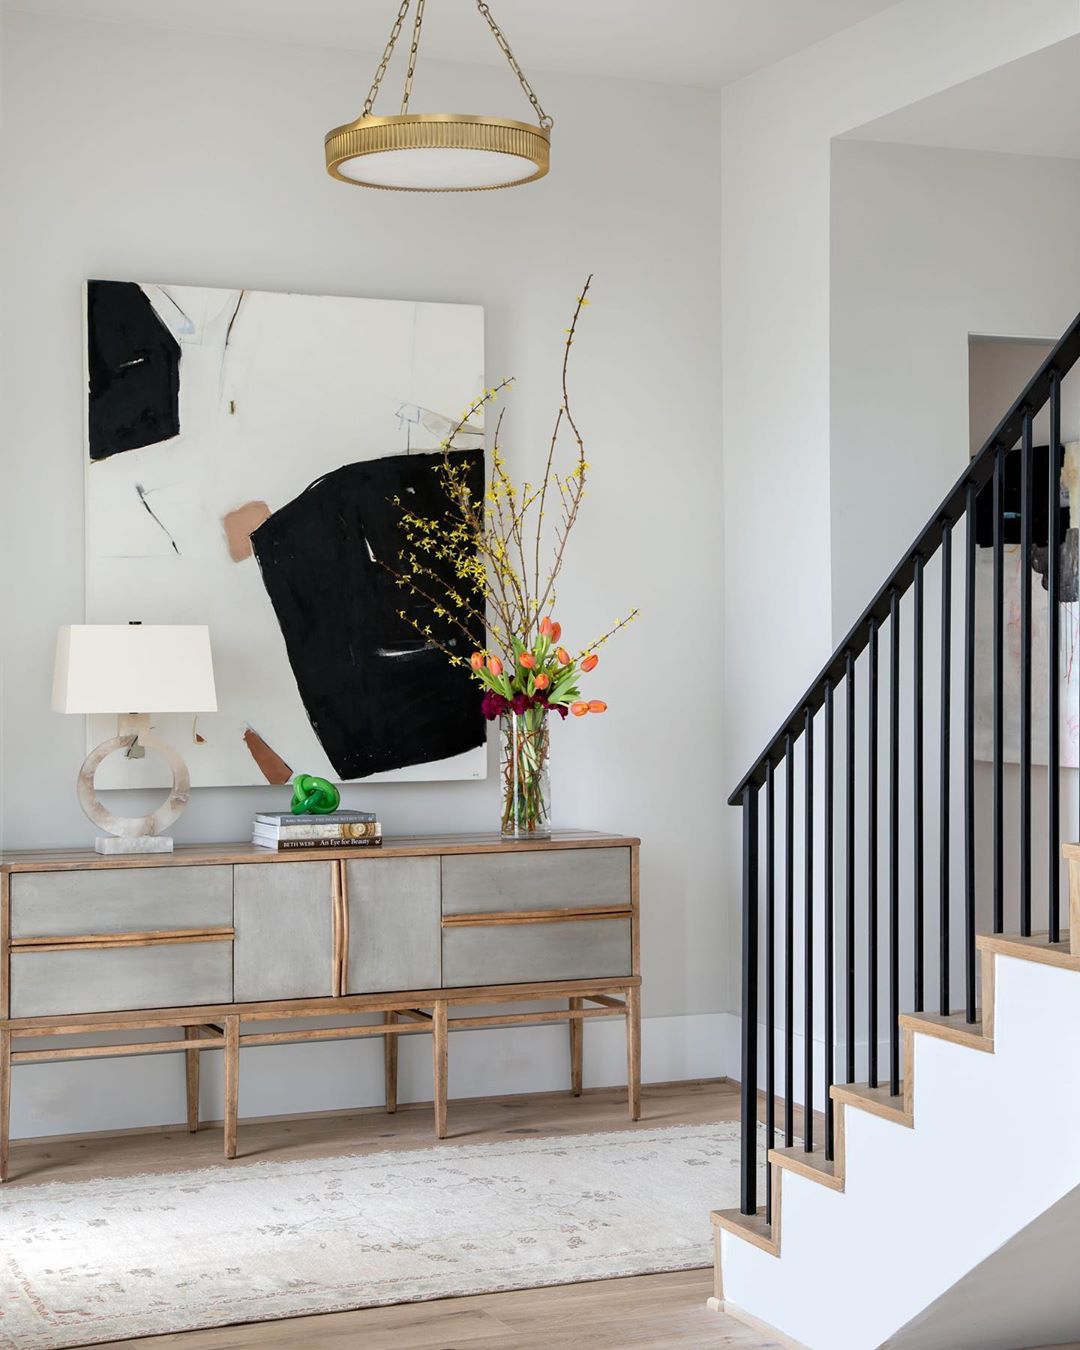 Modern Designed Home Focusing on Clean Lines. Photo by Instagram user @kerrykirkphoto